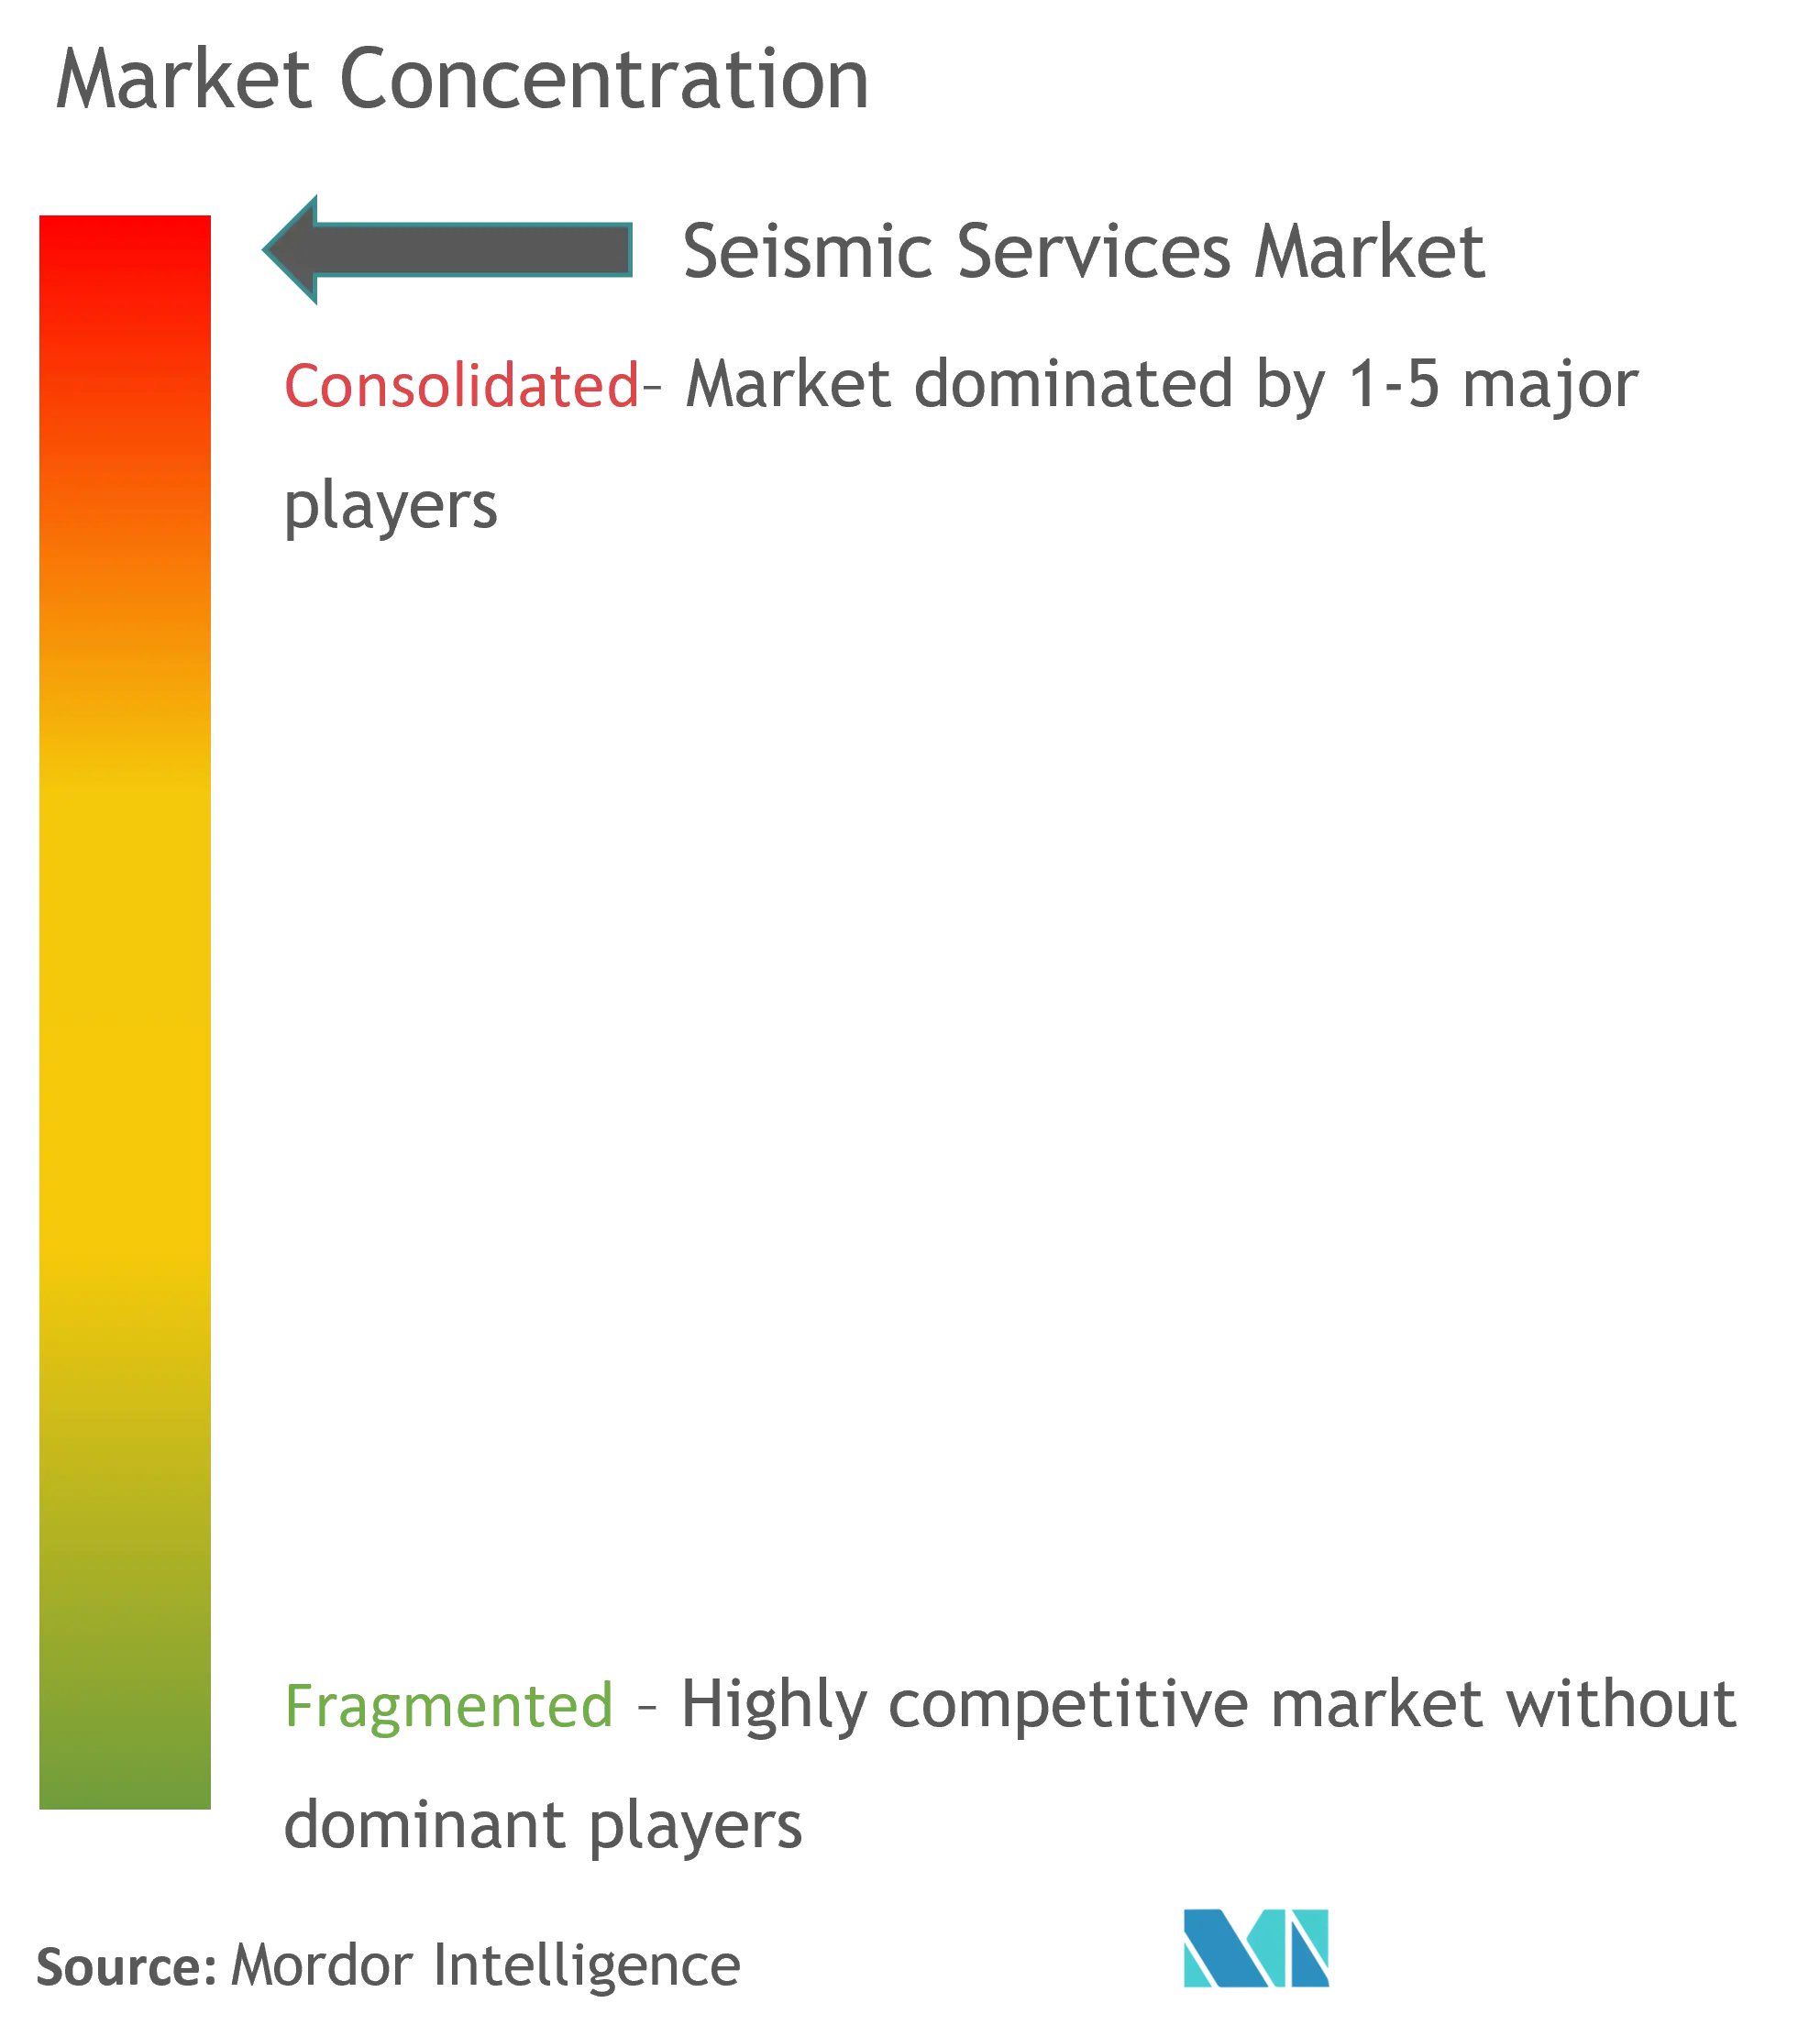 Seismic Services Market Concentration